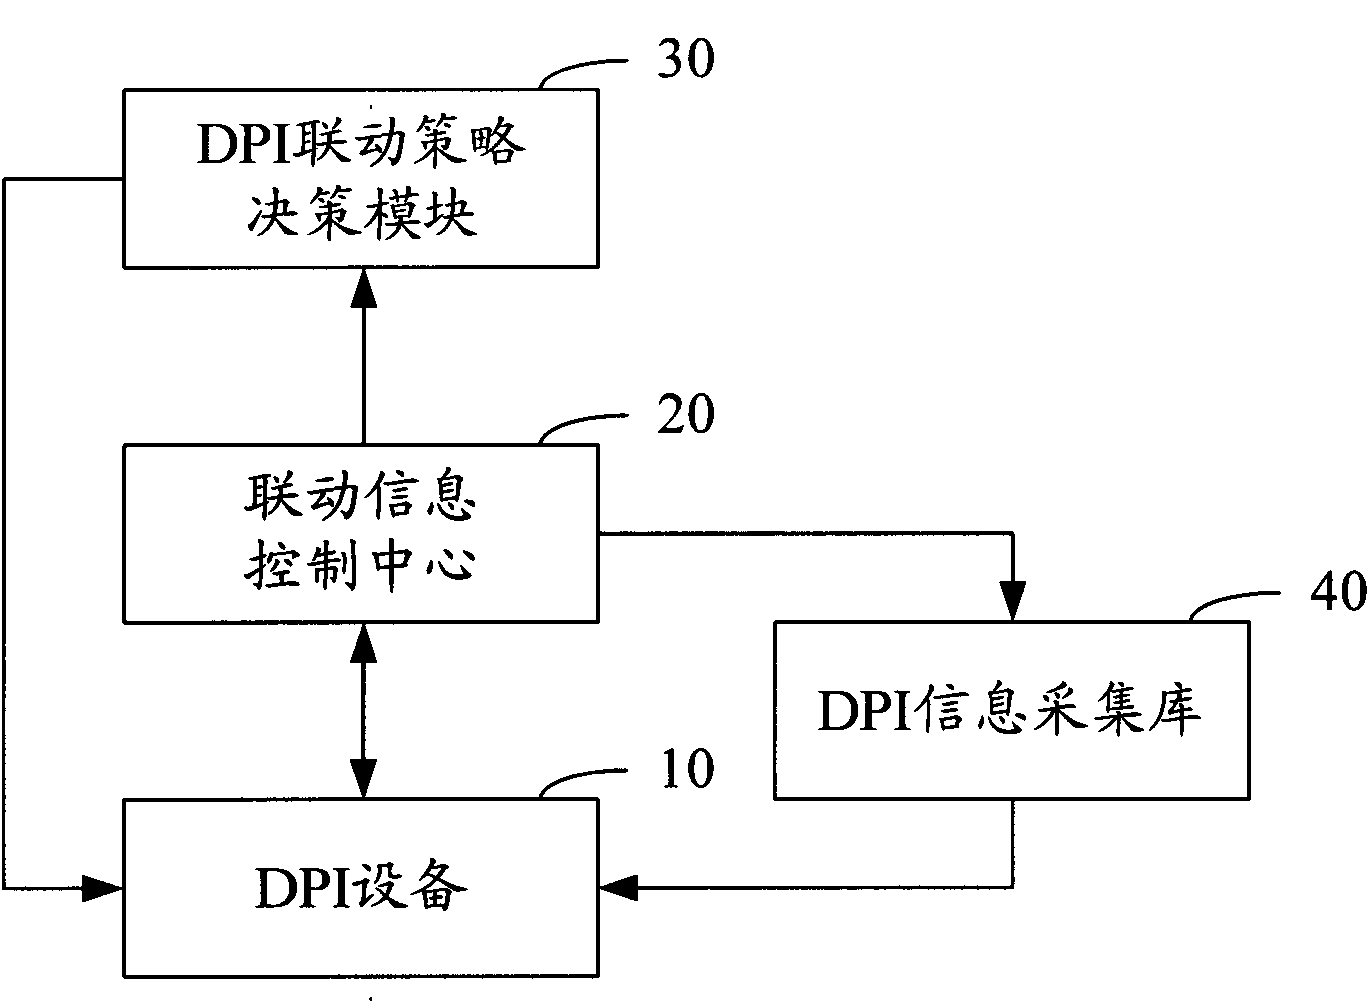 Method and system for registering DPI equipment